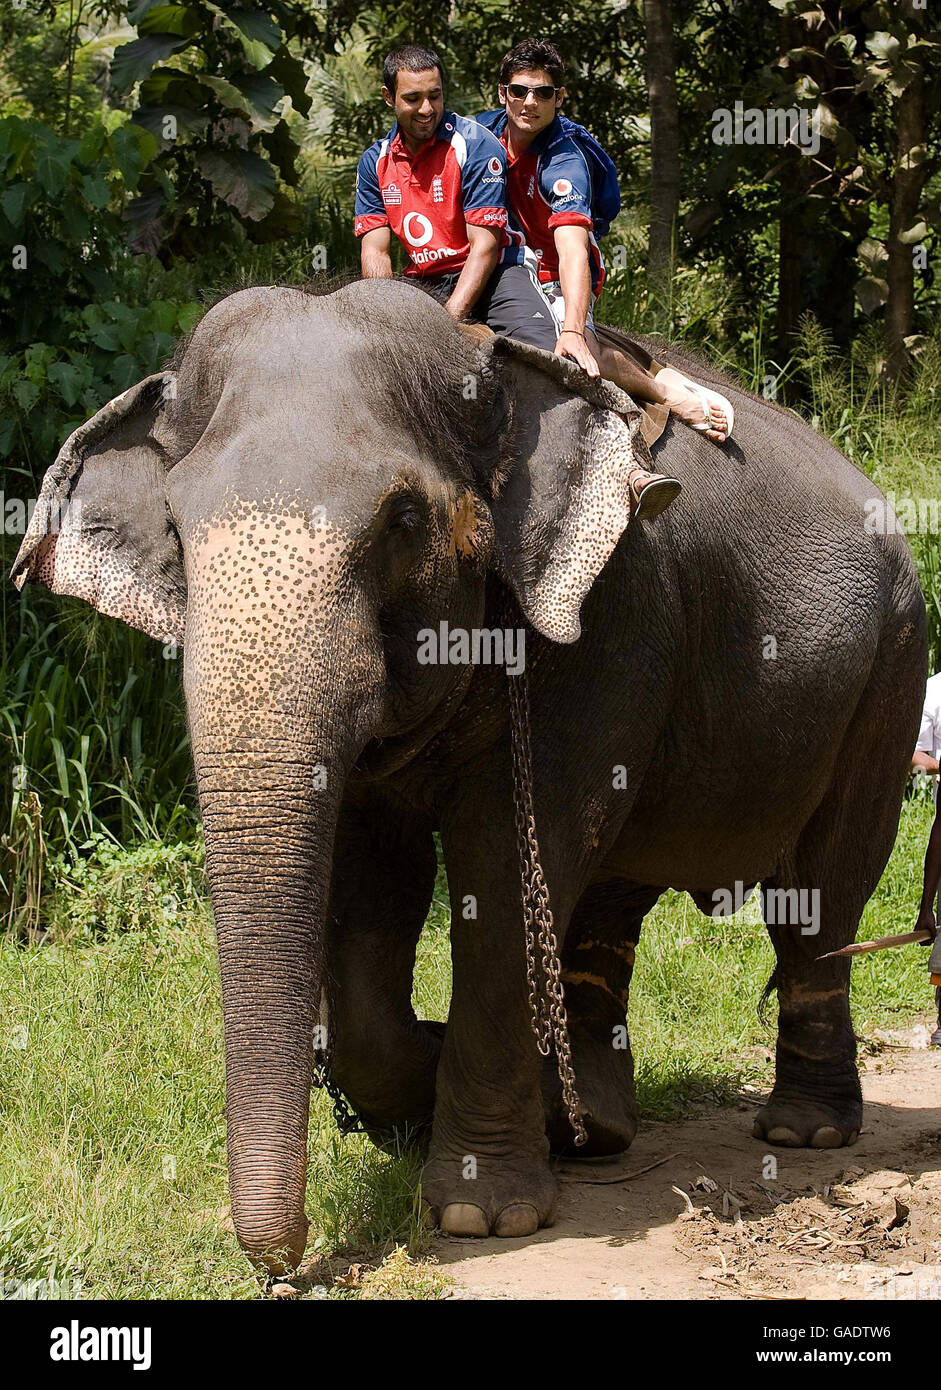 England's Ravi Bopara and Alastair Cook ride an elephant during a visit to Pinawella village near Kandy, Sri Lanka. Stock Photo